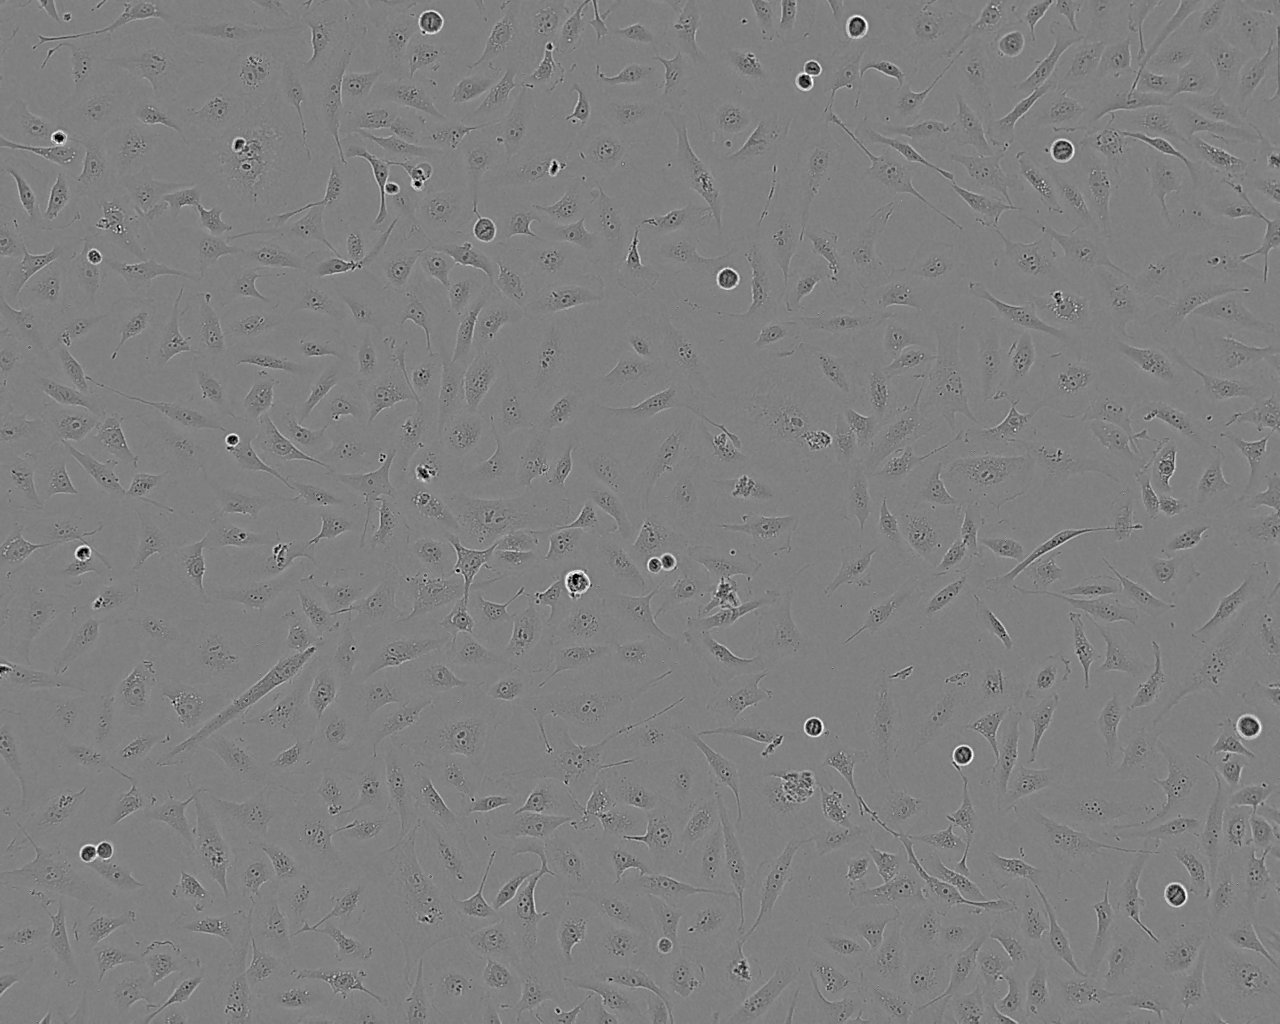 WSU-HN13 epithelioid cells人口腔鳞状细胞癌细胞系